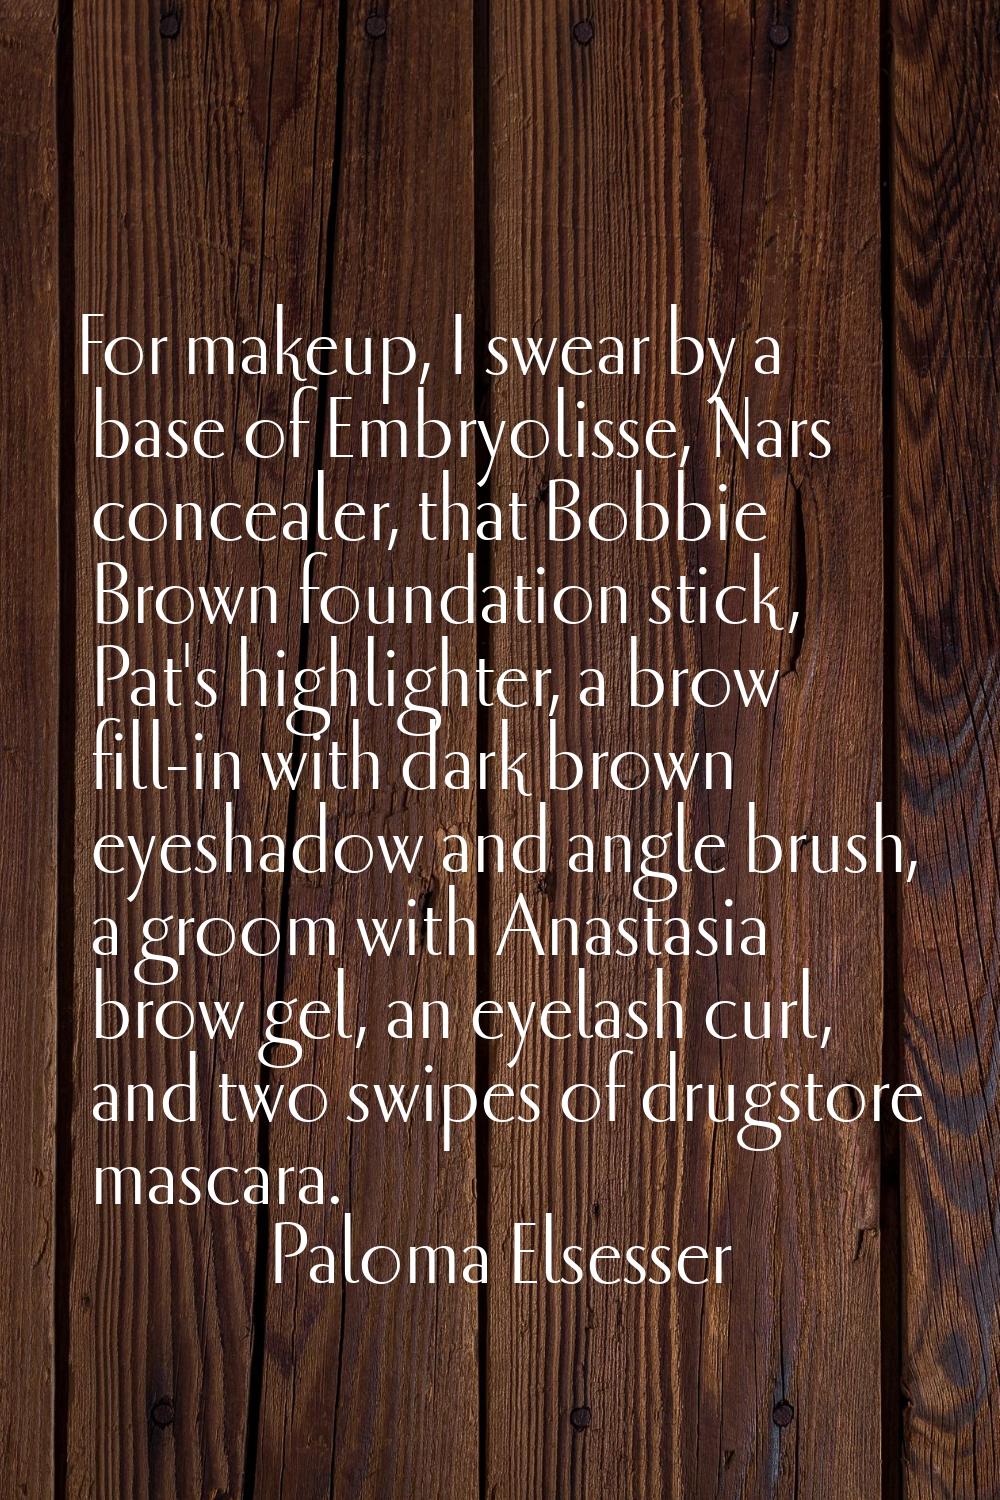 For makeup, I swear by a base of Embryolisse, Nars concealer, that Bobbie Brown foundation stick, P